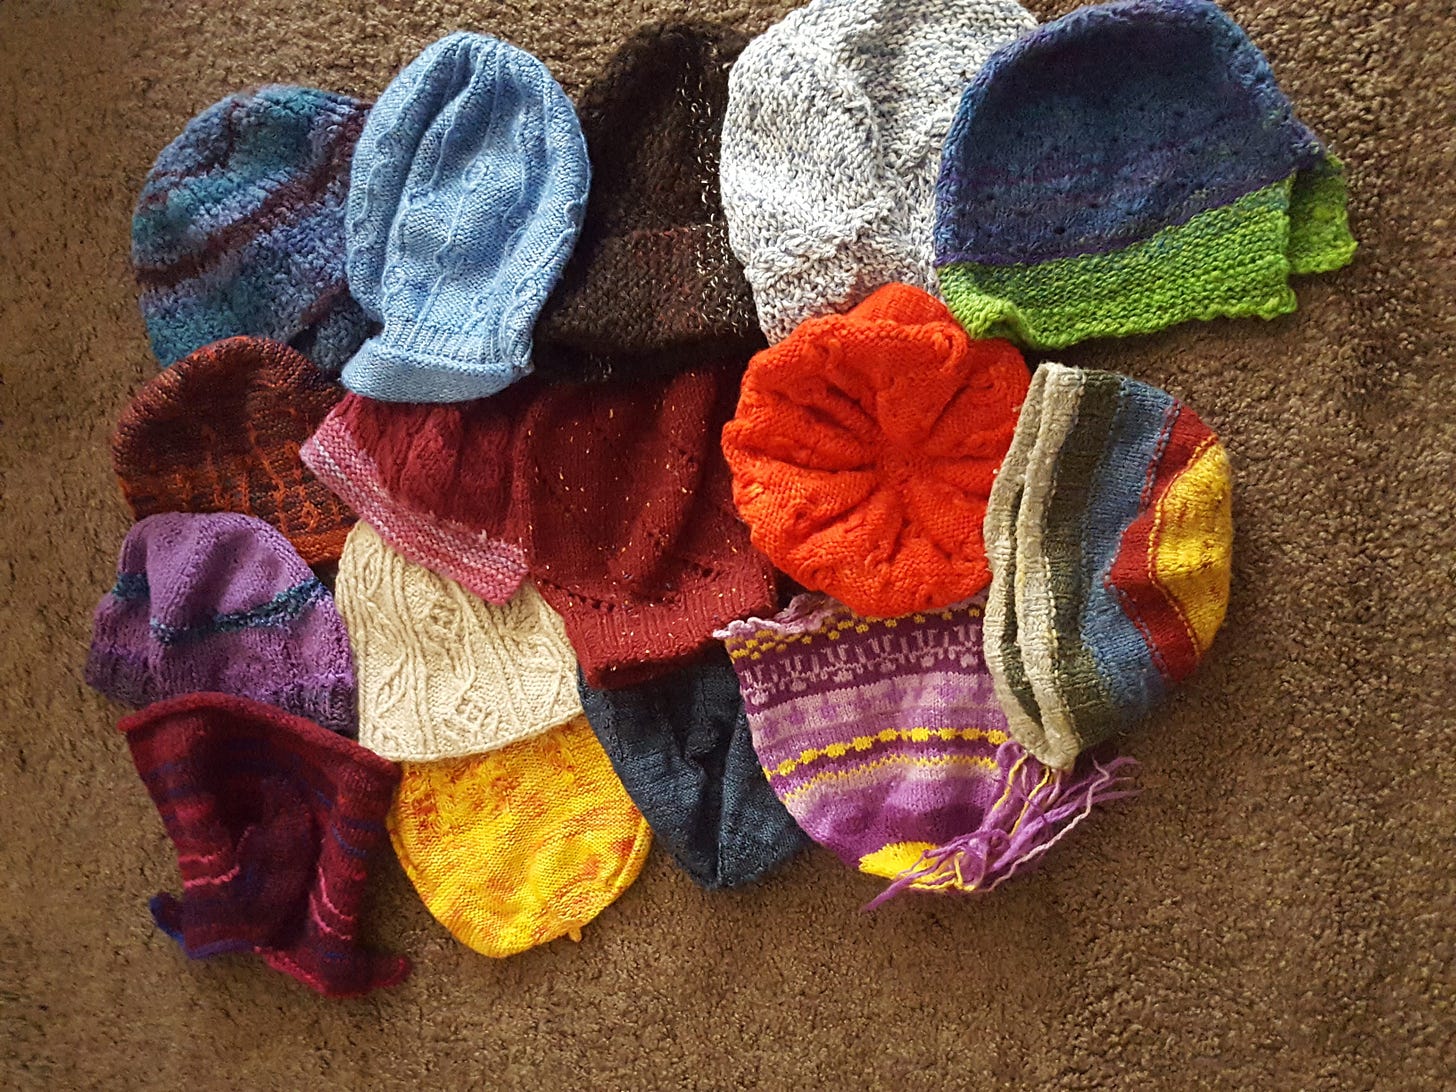 A pile of handknit hats showing abundance.